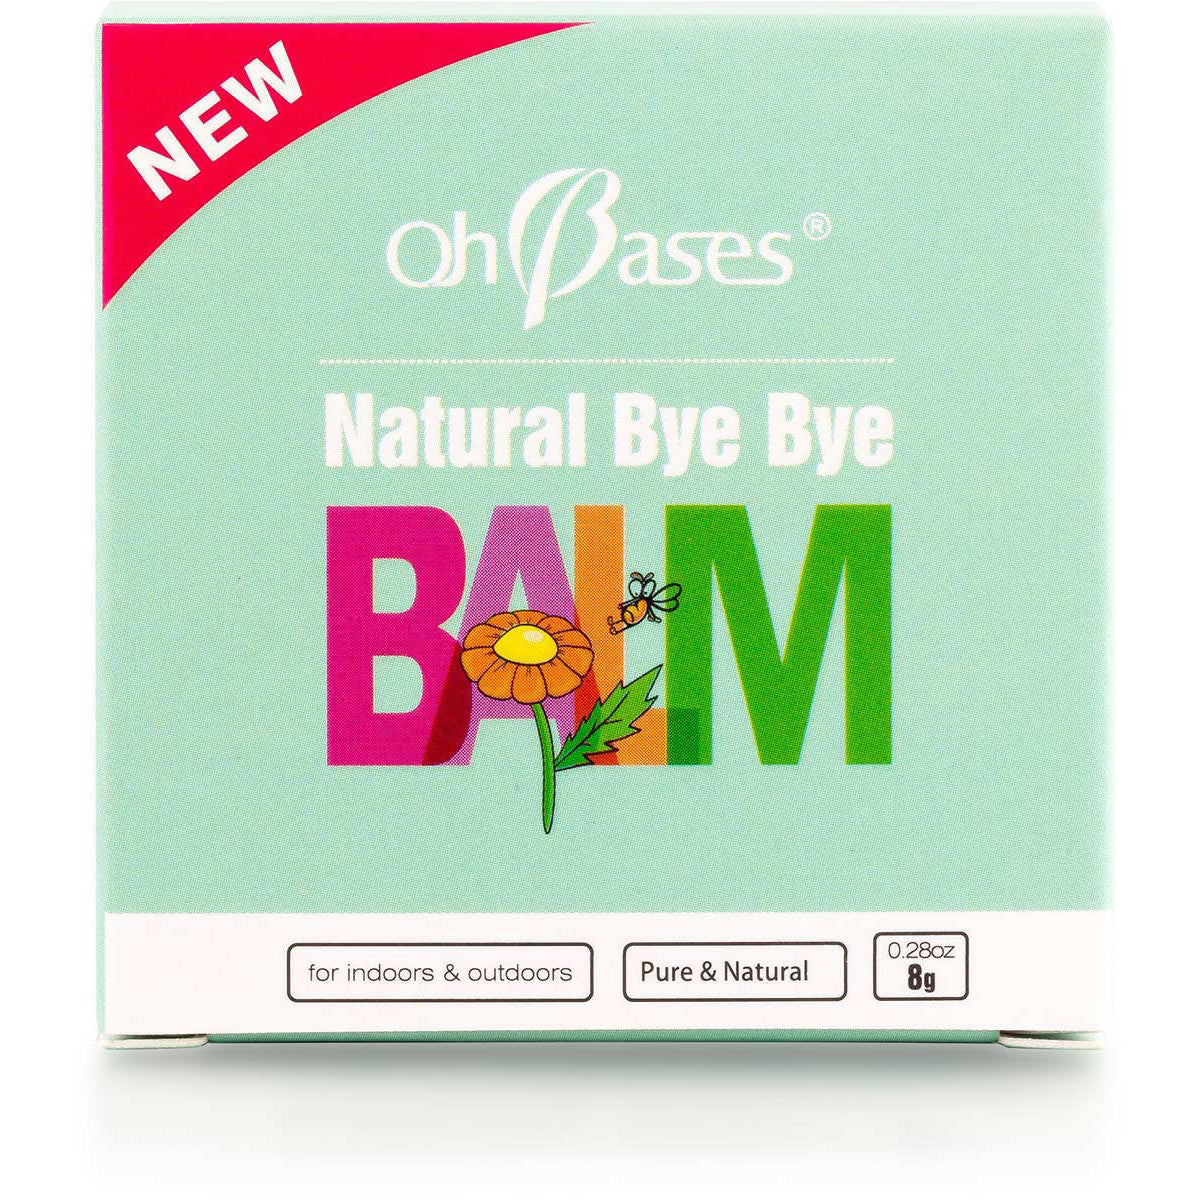 Natural Bye Bye Balm - OhBases